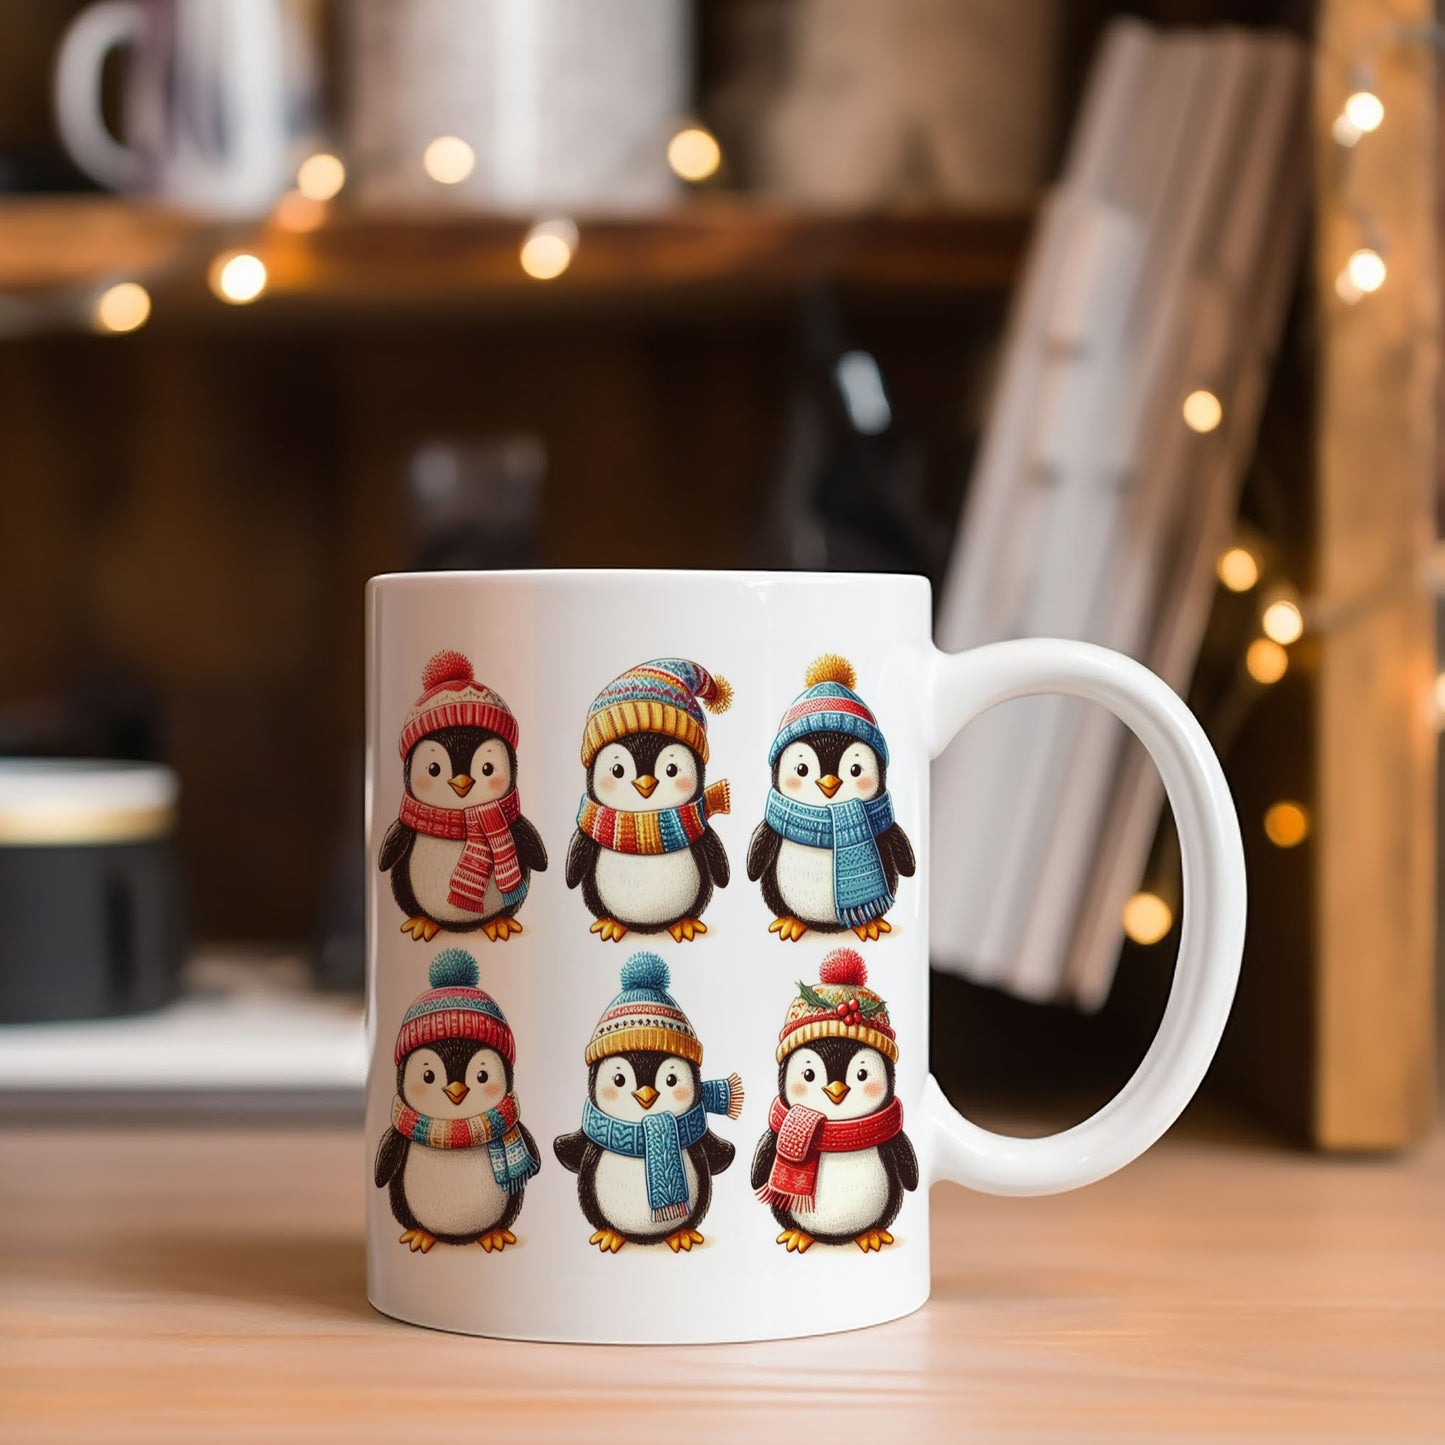 Winter Penguin Mugs, Christmas Penguin Mugs, Mugs Christmas Designs, Inexpensive Holiday Gifts, Secret Santa Gift, Hot Chocolate Mug